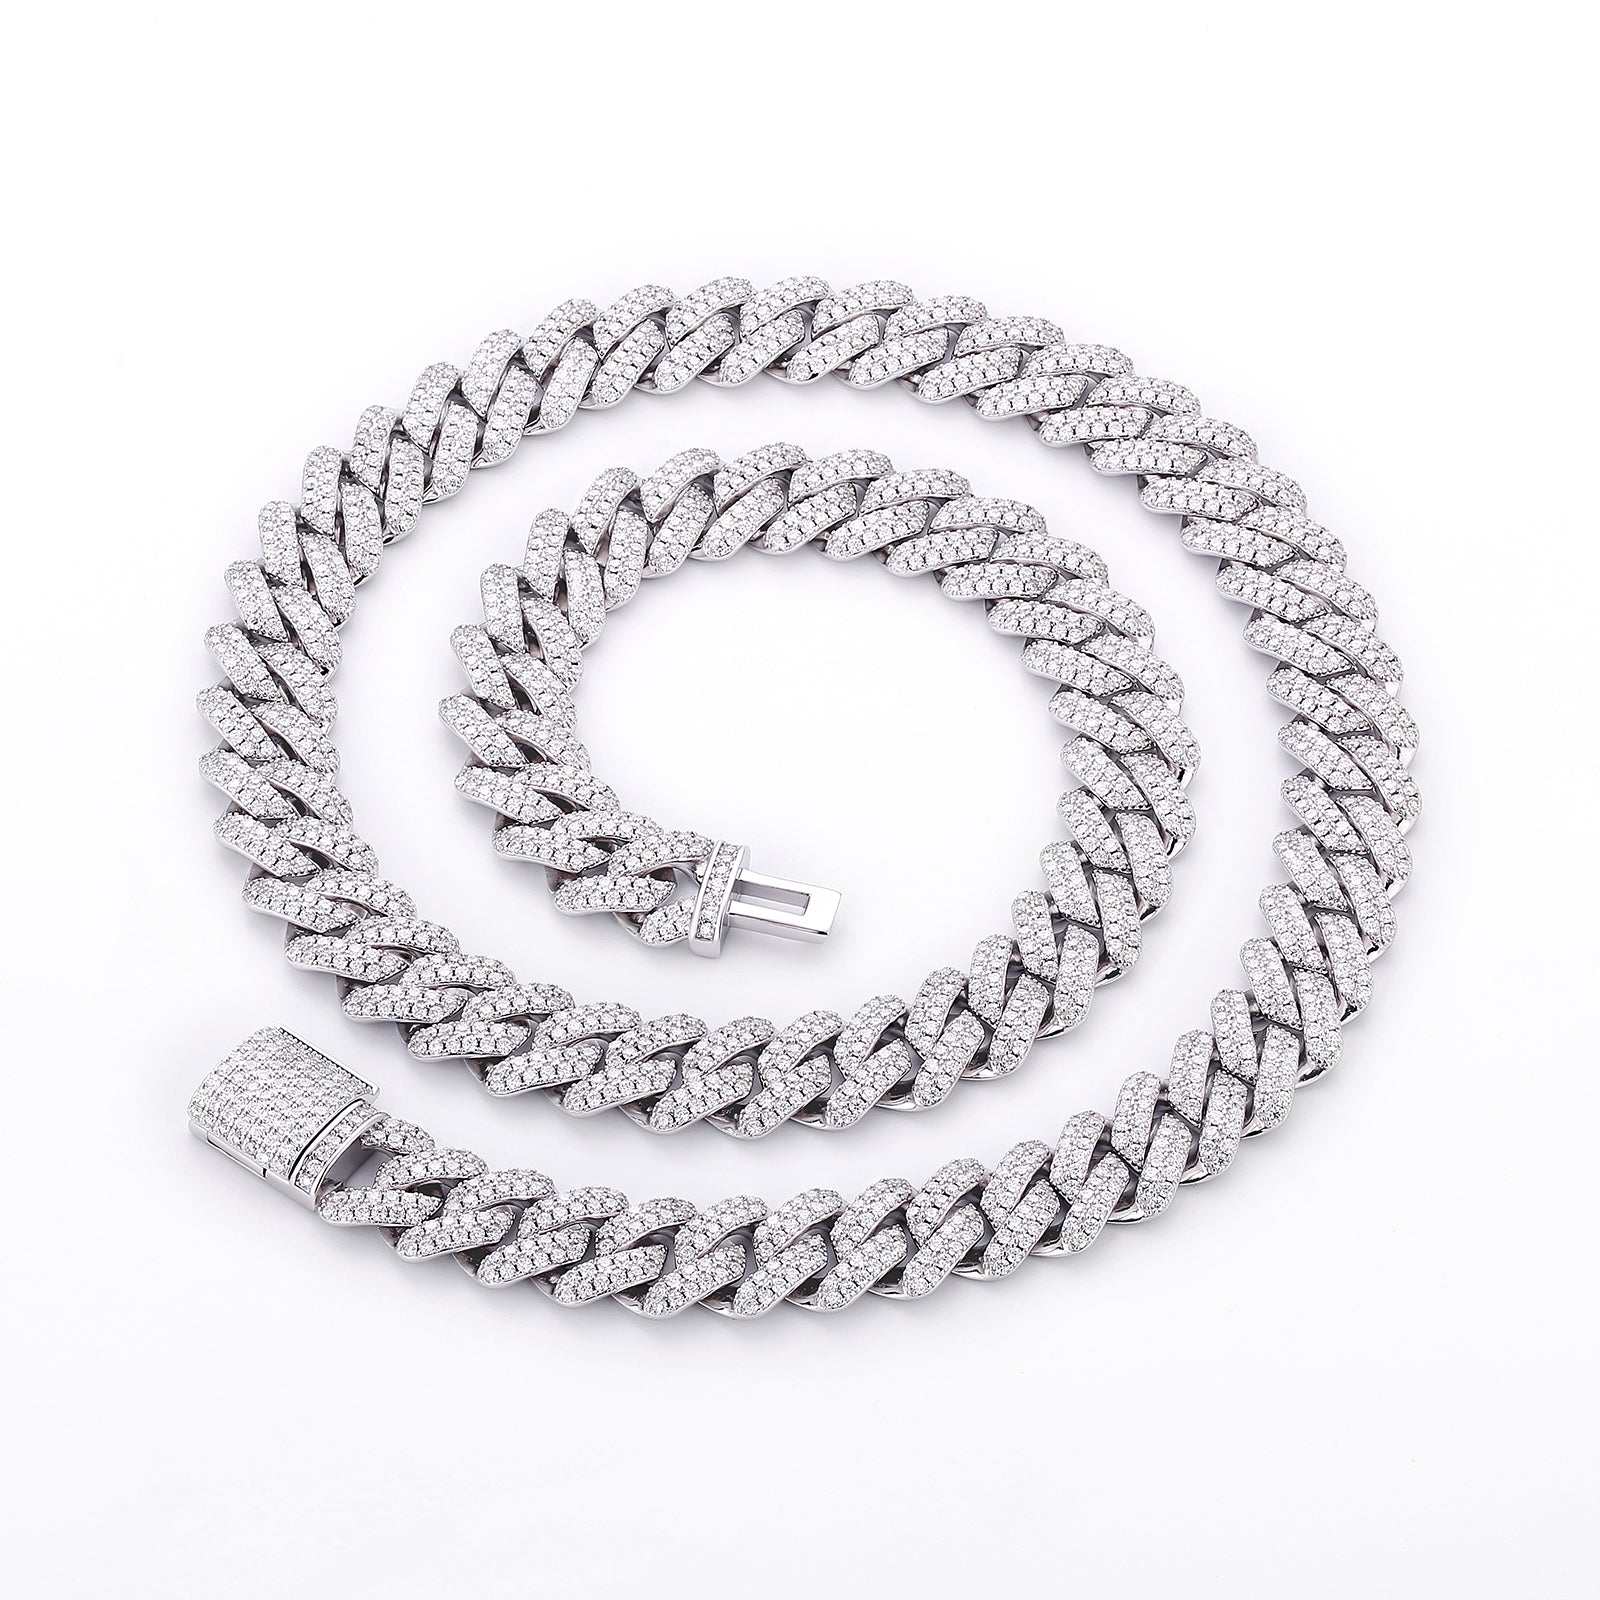 KRKC&CO 14mm Moissanite Cuban Link Chain Necklace S925 Silver